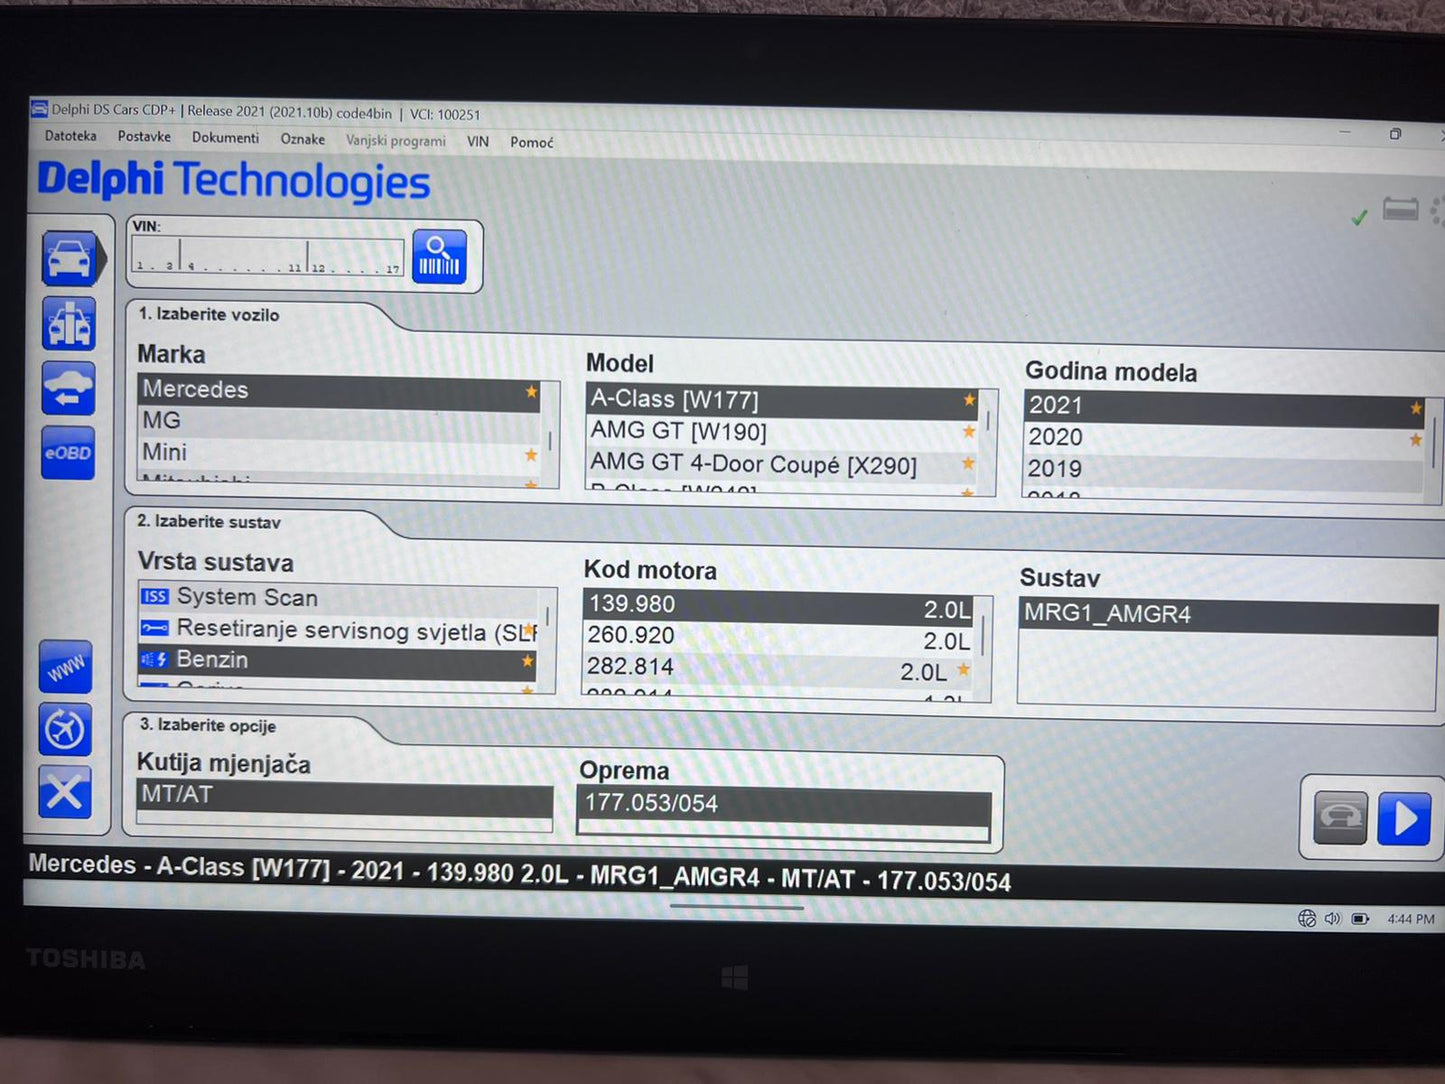 Toshiba Portege Z20T Intel M7-6y75 8gb 256gb SSD 12.5" FHD Laptop Tablet